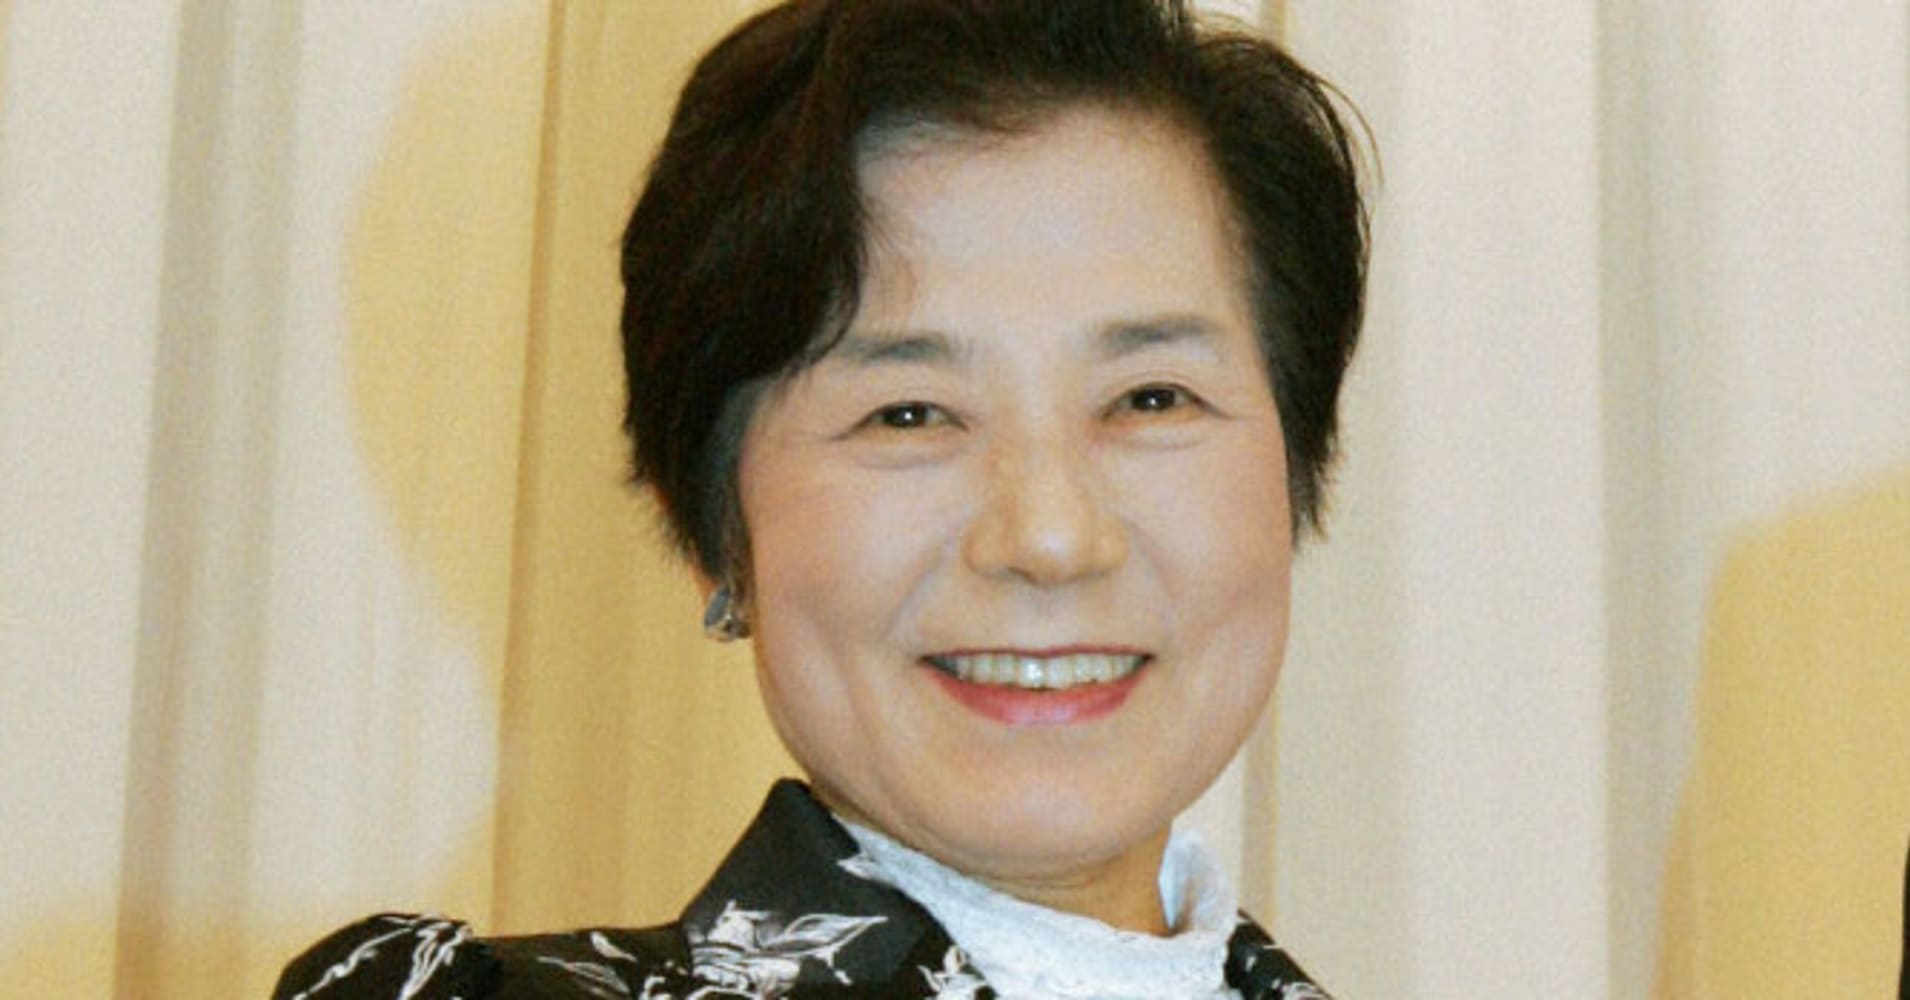 Japans First Self Made Woman Billionaire Began With An Illegal Idea